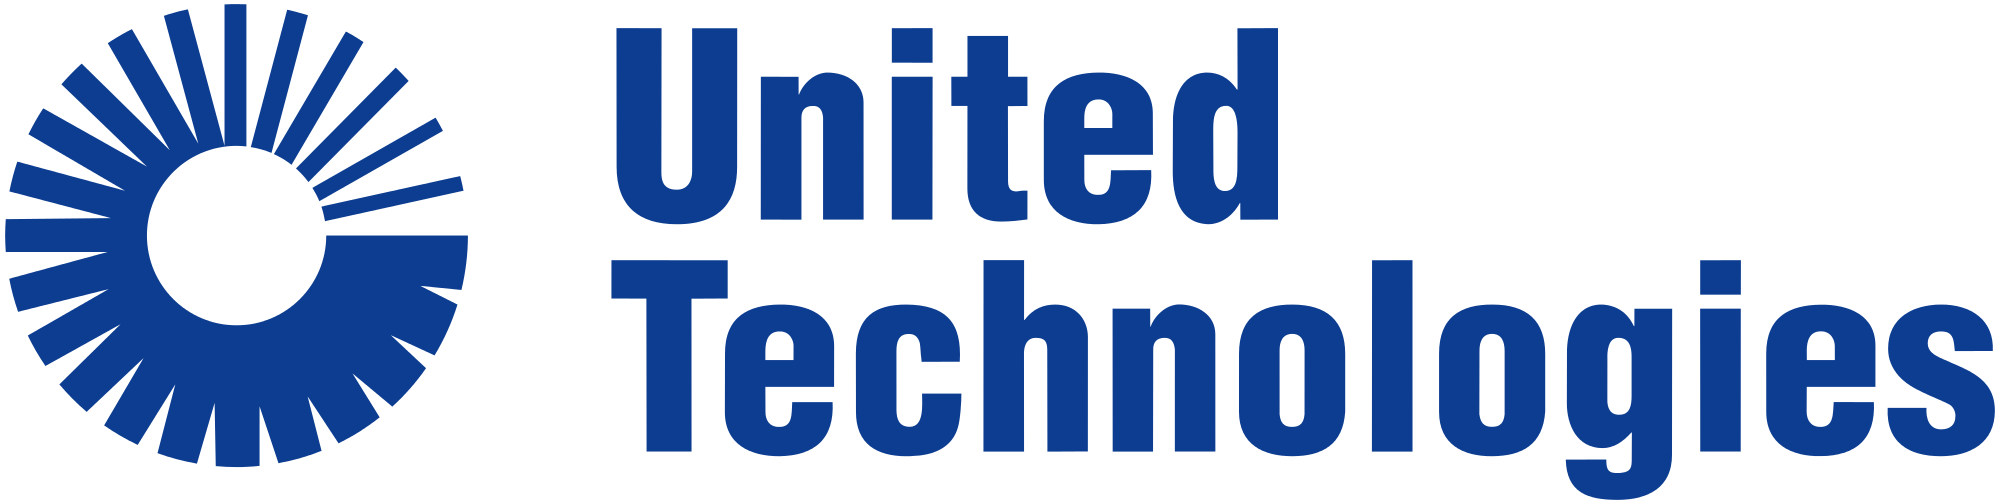 United Technologies